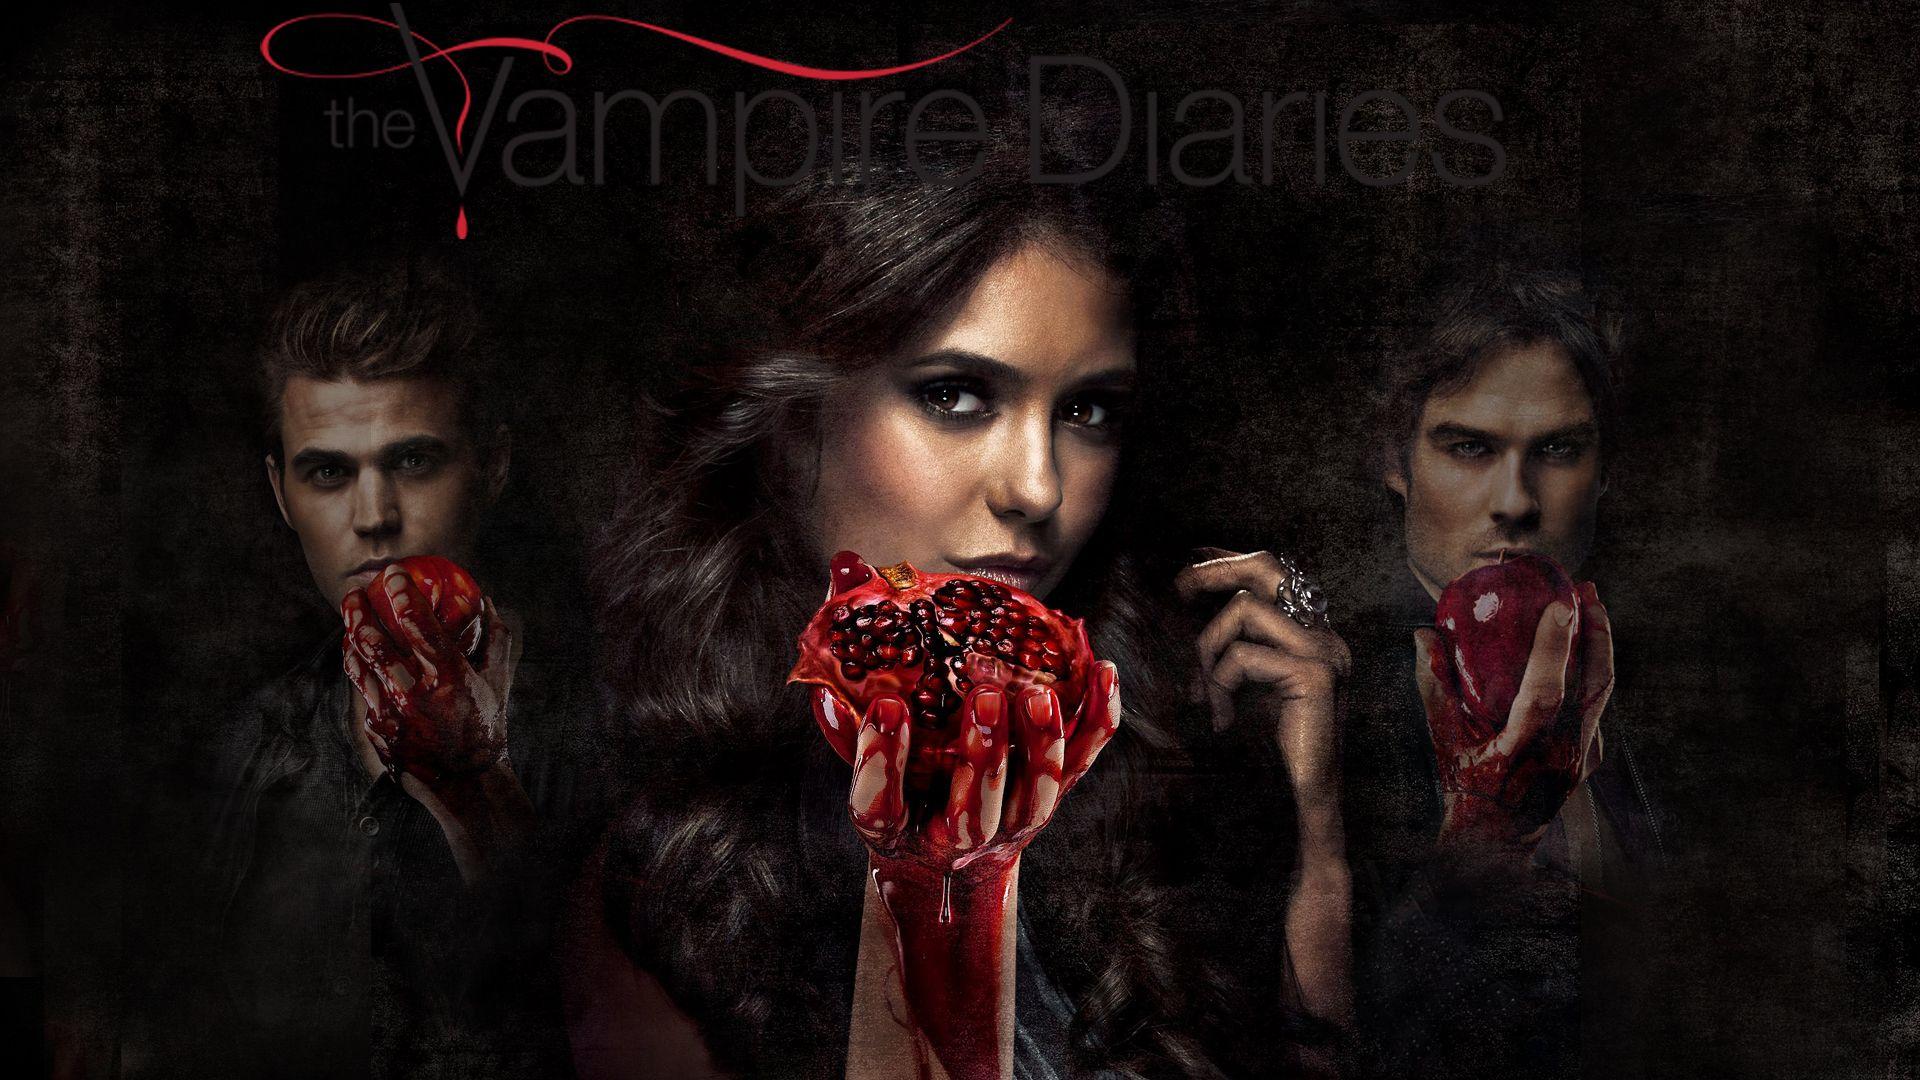 The Vampire Diaries Wallpapers.